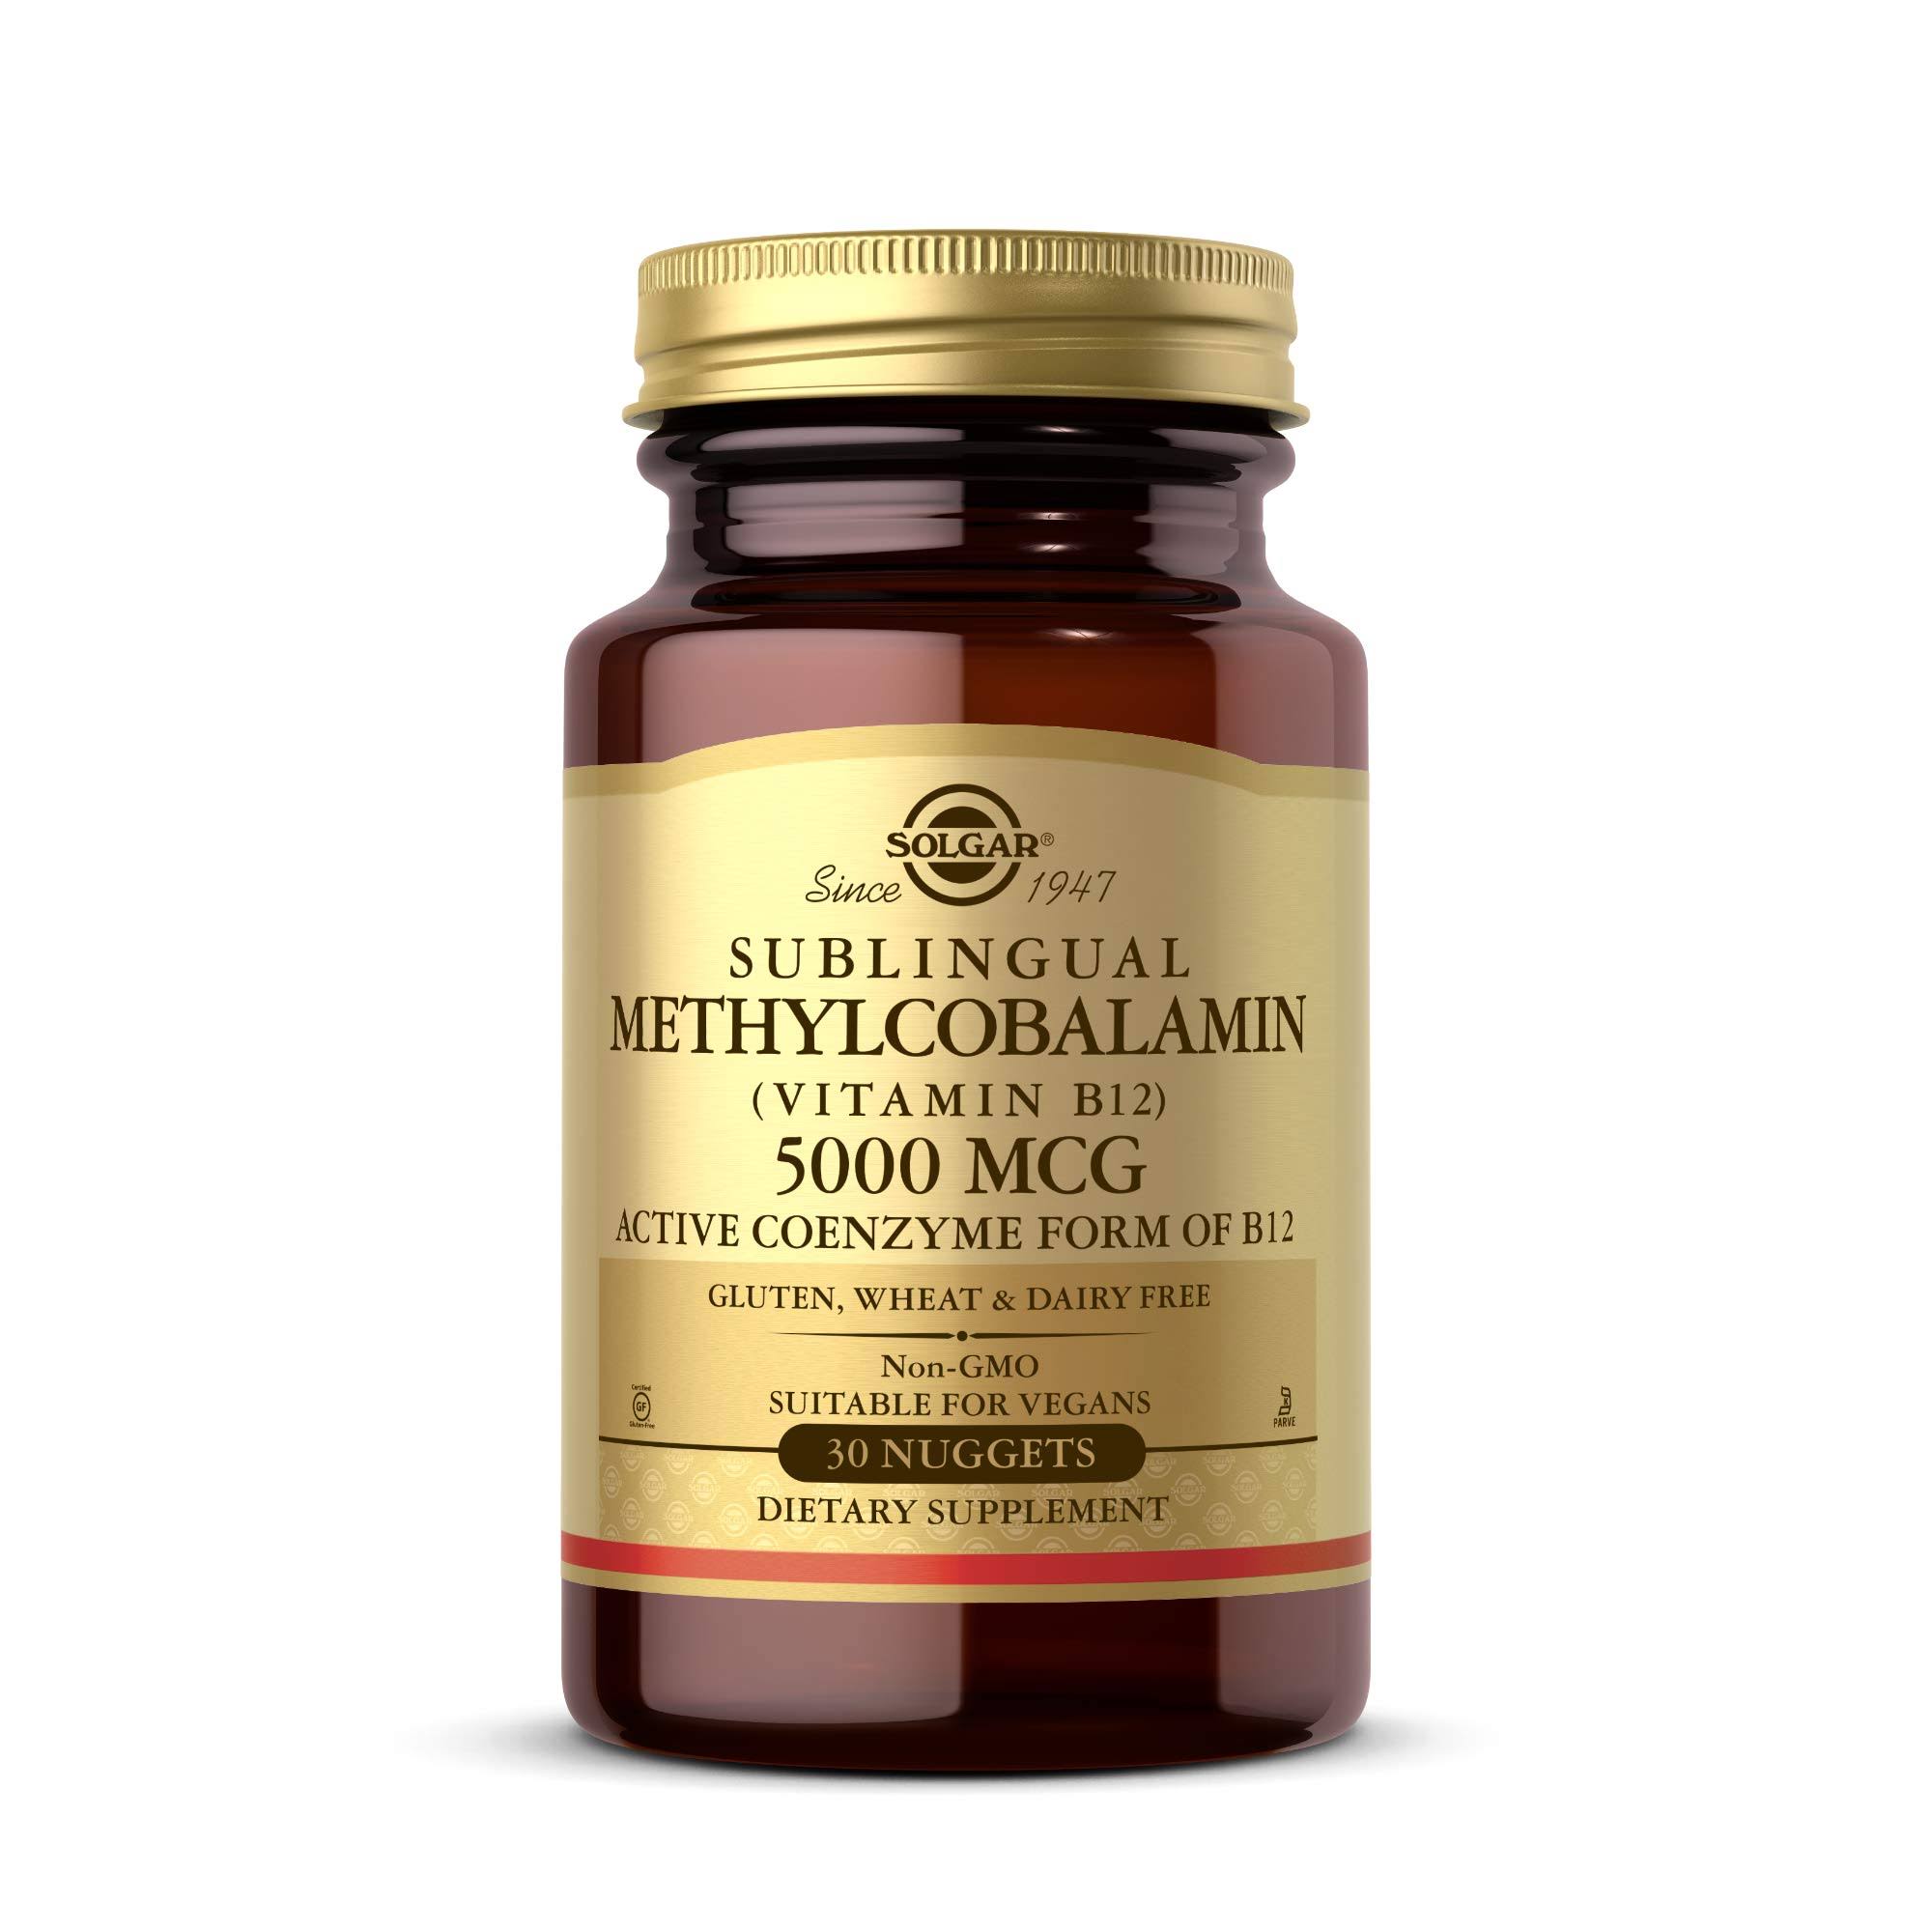 Solgar Methylcobalamin Vitamin B12 - 5000mcg, 30 Nuggets